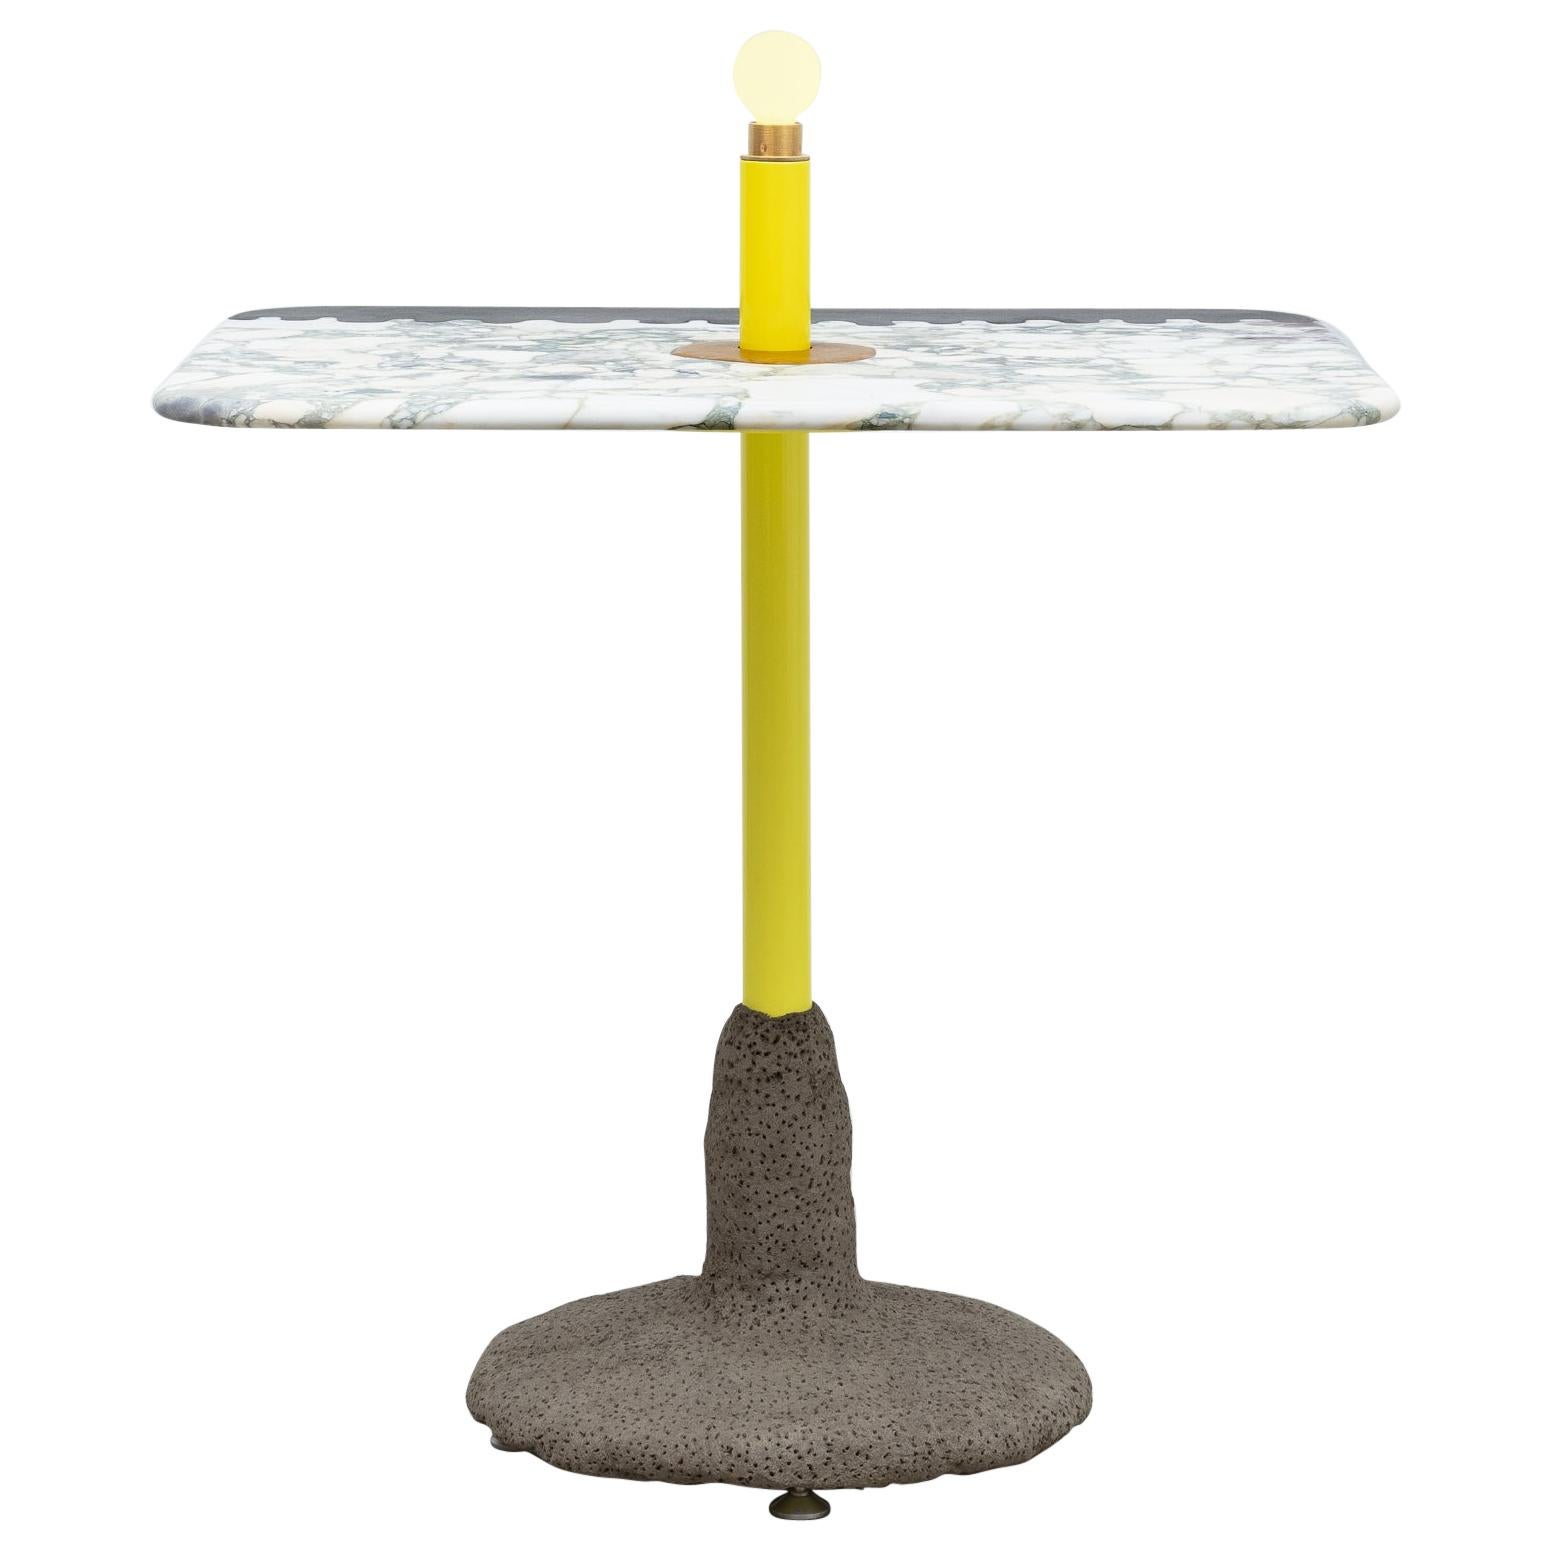 Jonathan Trayte, 'Wawa Island', Breakfast Table with Lamp, Yellow, Marble, 2018